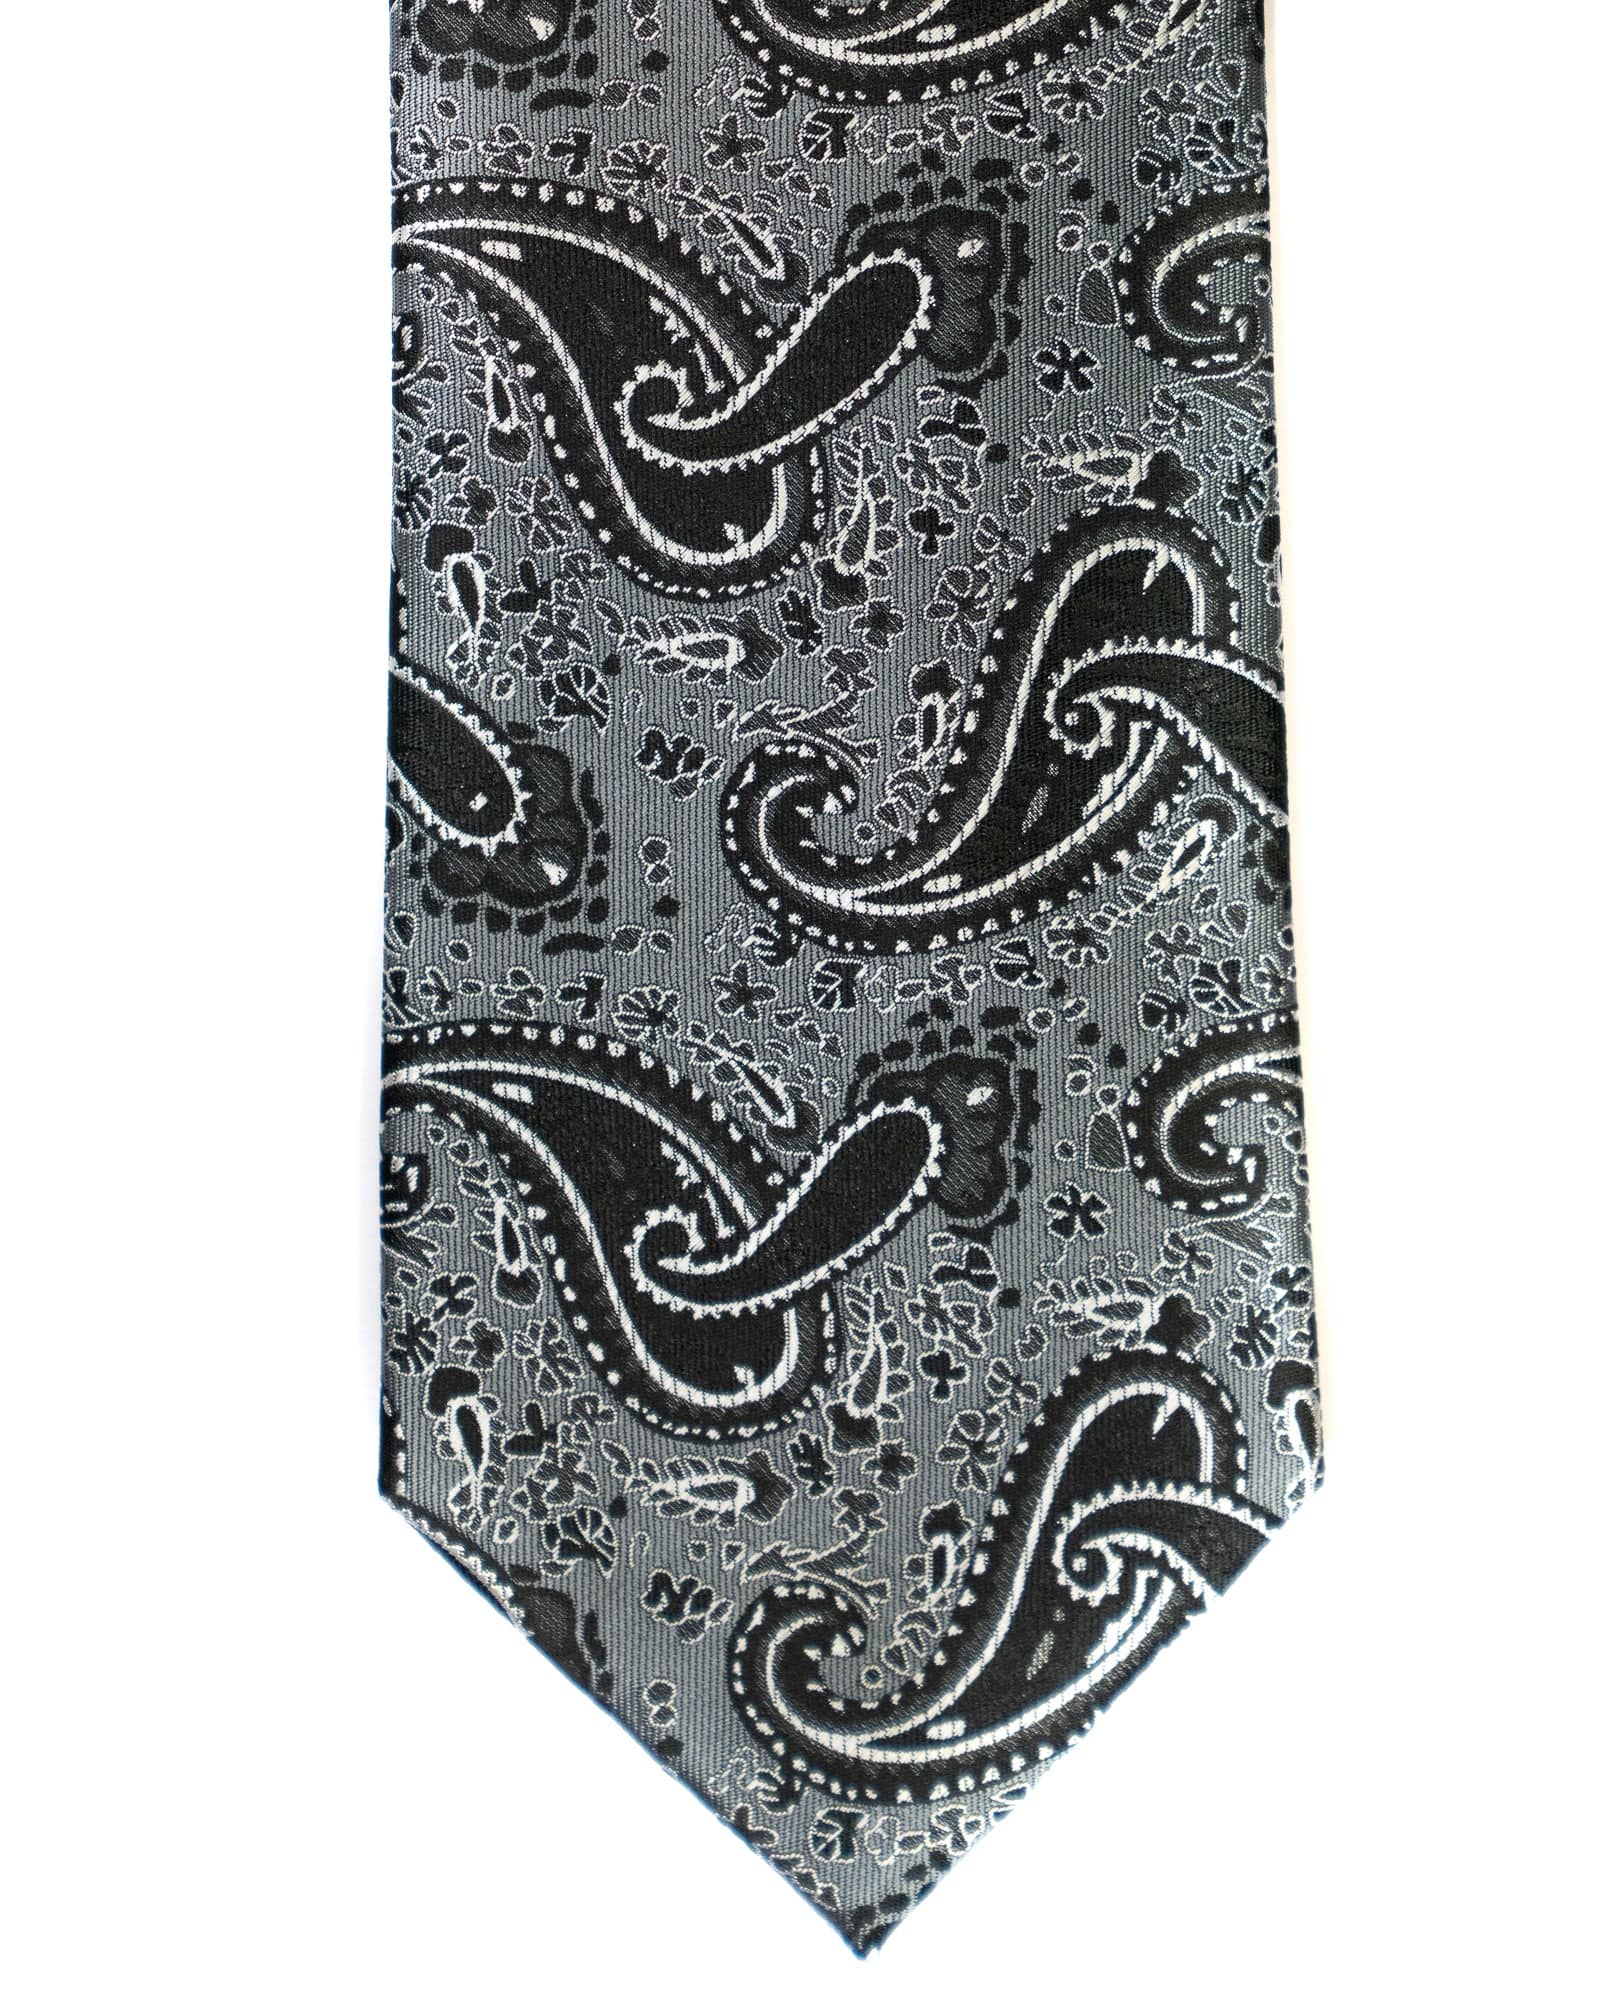 Venturi Uomo Paisley Tie in Grey with Black - Rainwater's Men's Clothing and Tuxedo Rental